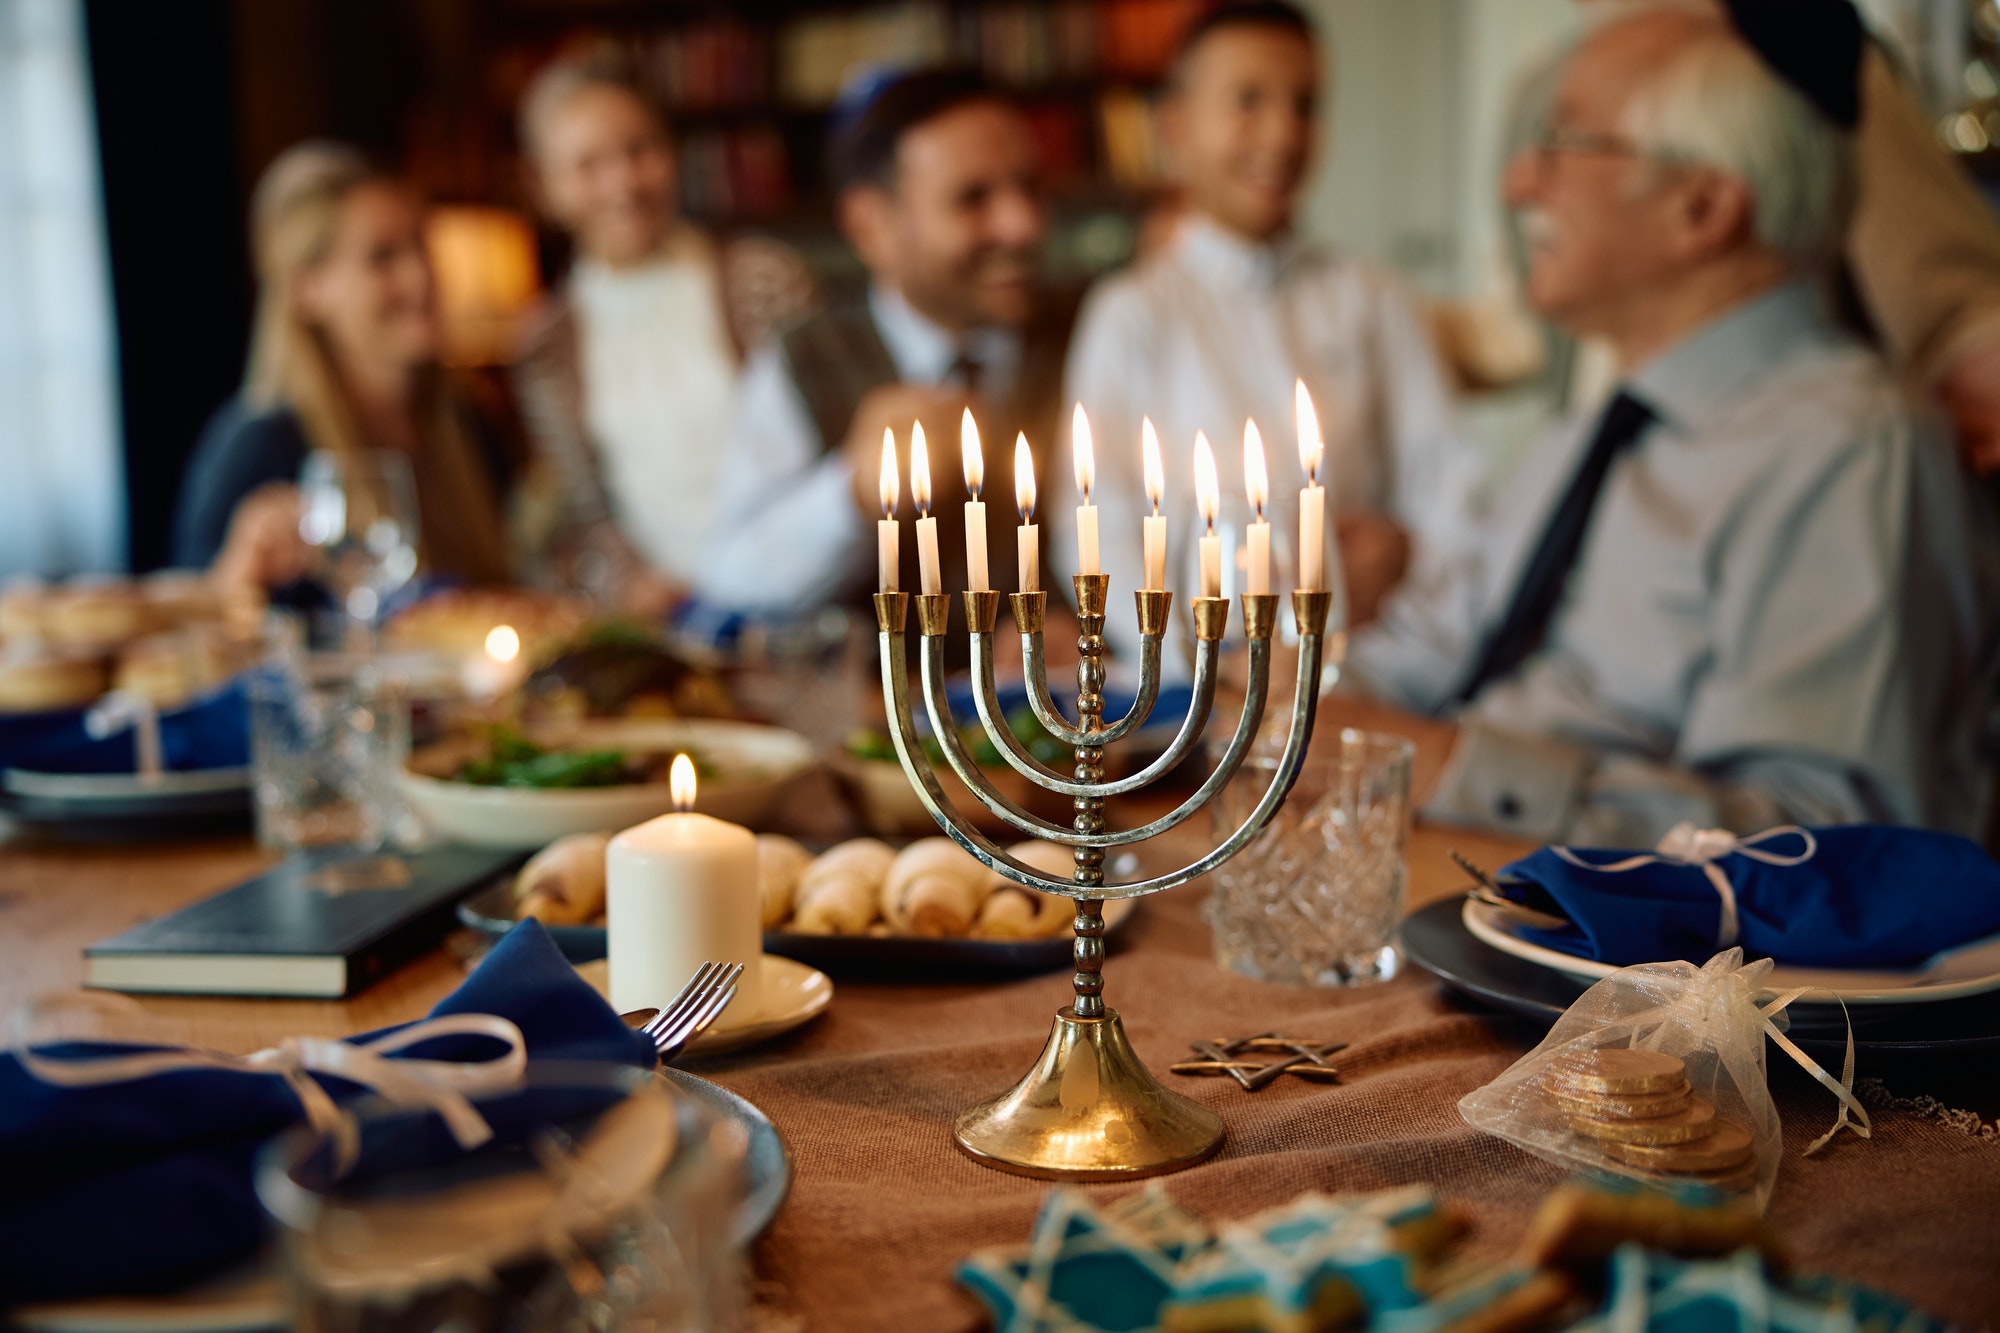 Lit candles in menorah with Jewish multigeneration family gathered for Hanukkah celebration.